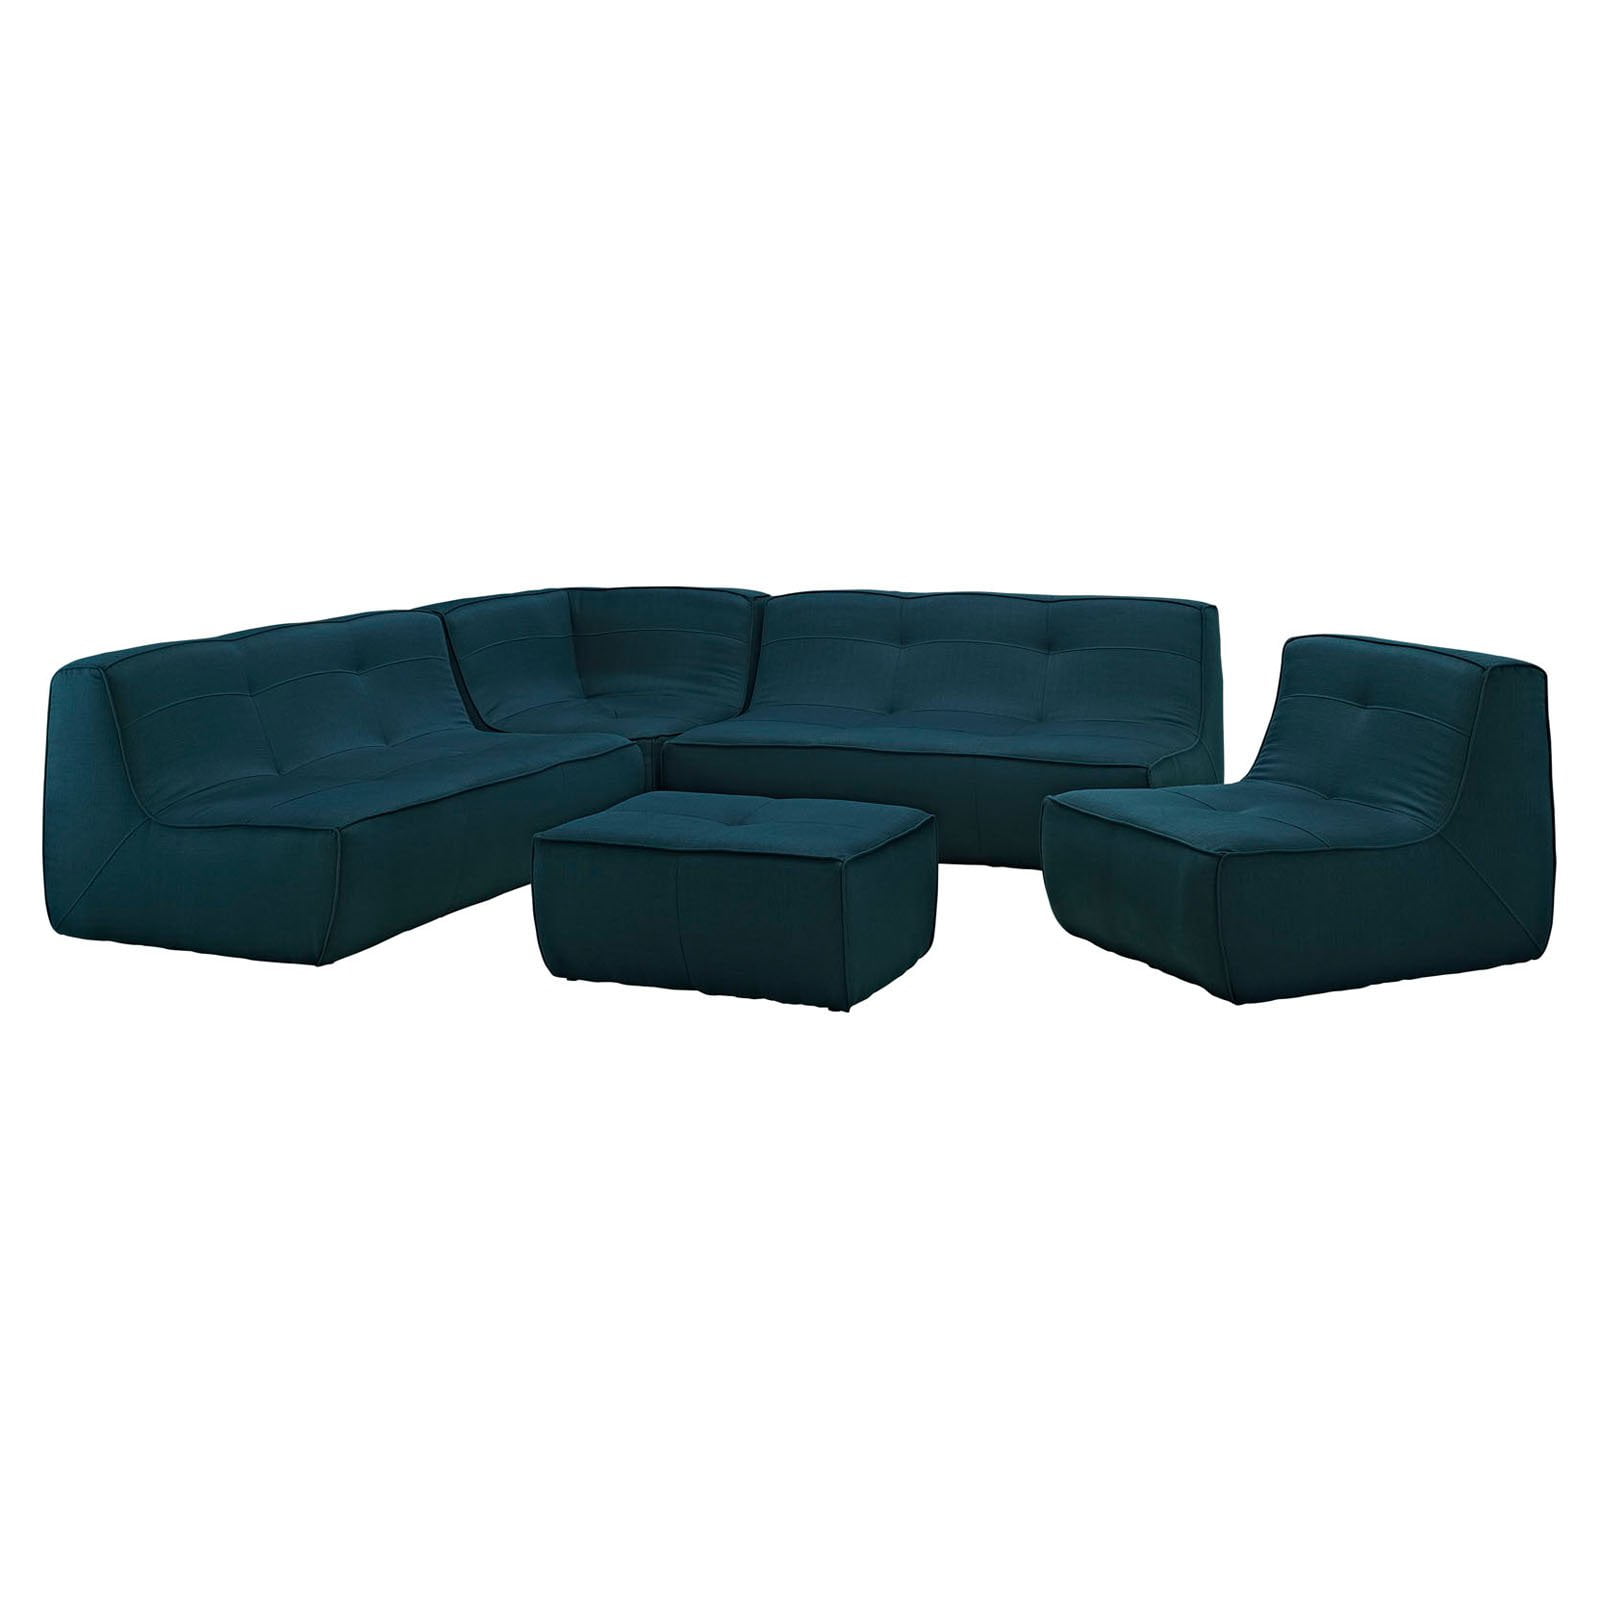 Modway Align 5 Piece Upholstered Sectional Sofa Set Azure throughout Astounding Align Azure Upholstered Sectional Sofa Set you must have